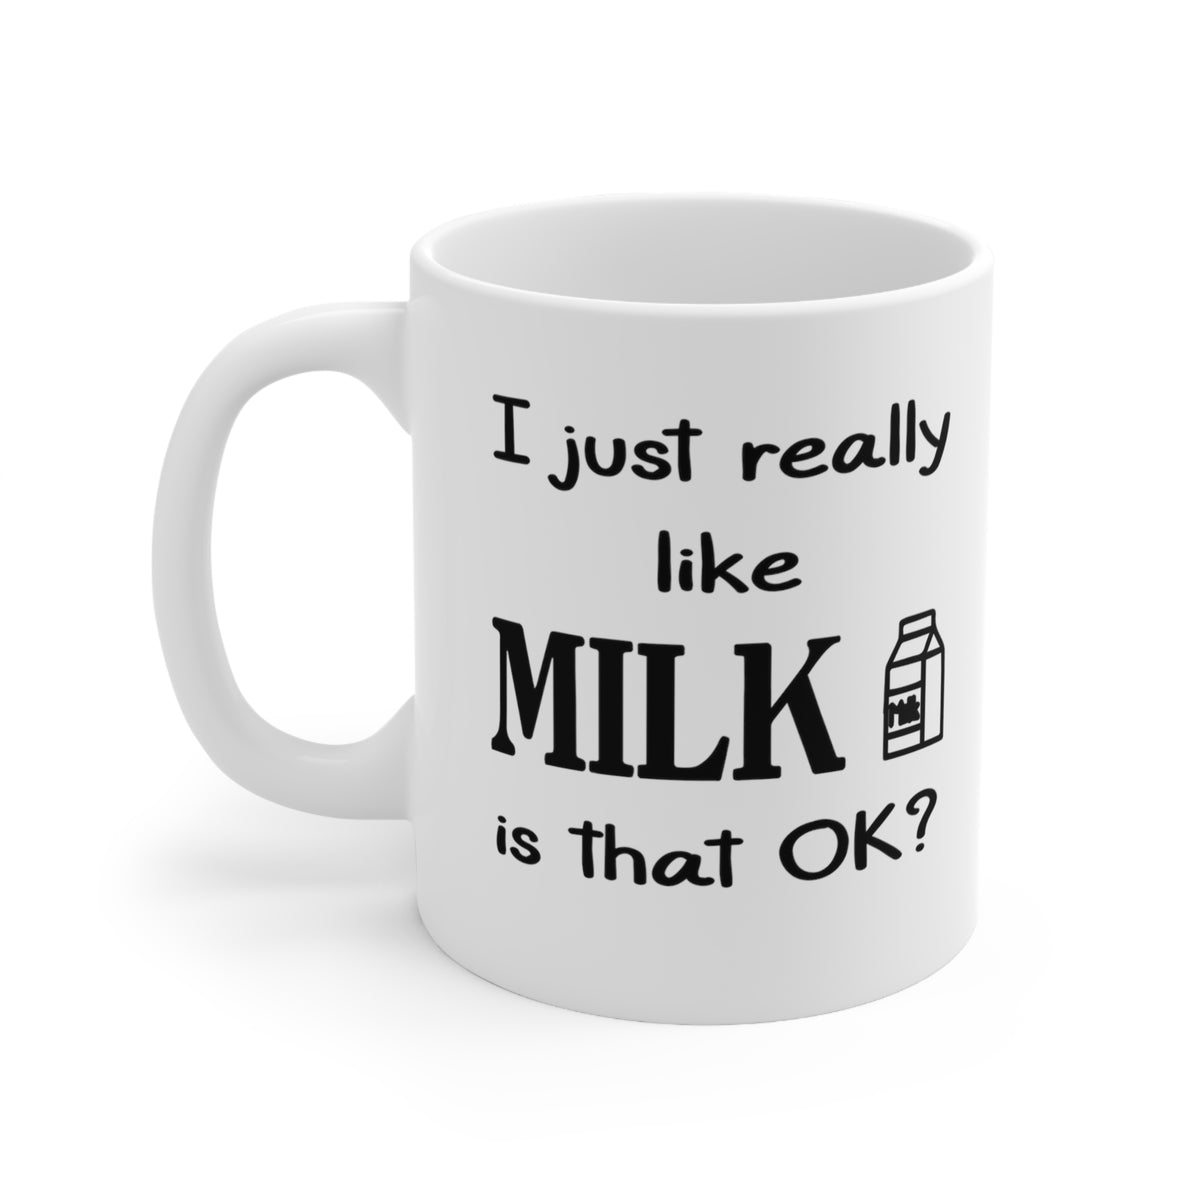 Funny Mug Gift For Milk Lovers - I just really like Milk - Birthday Present - Christmas Gift